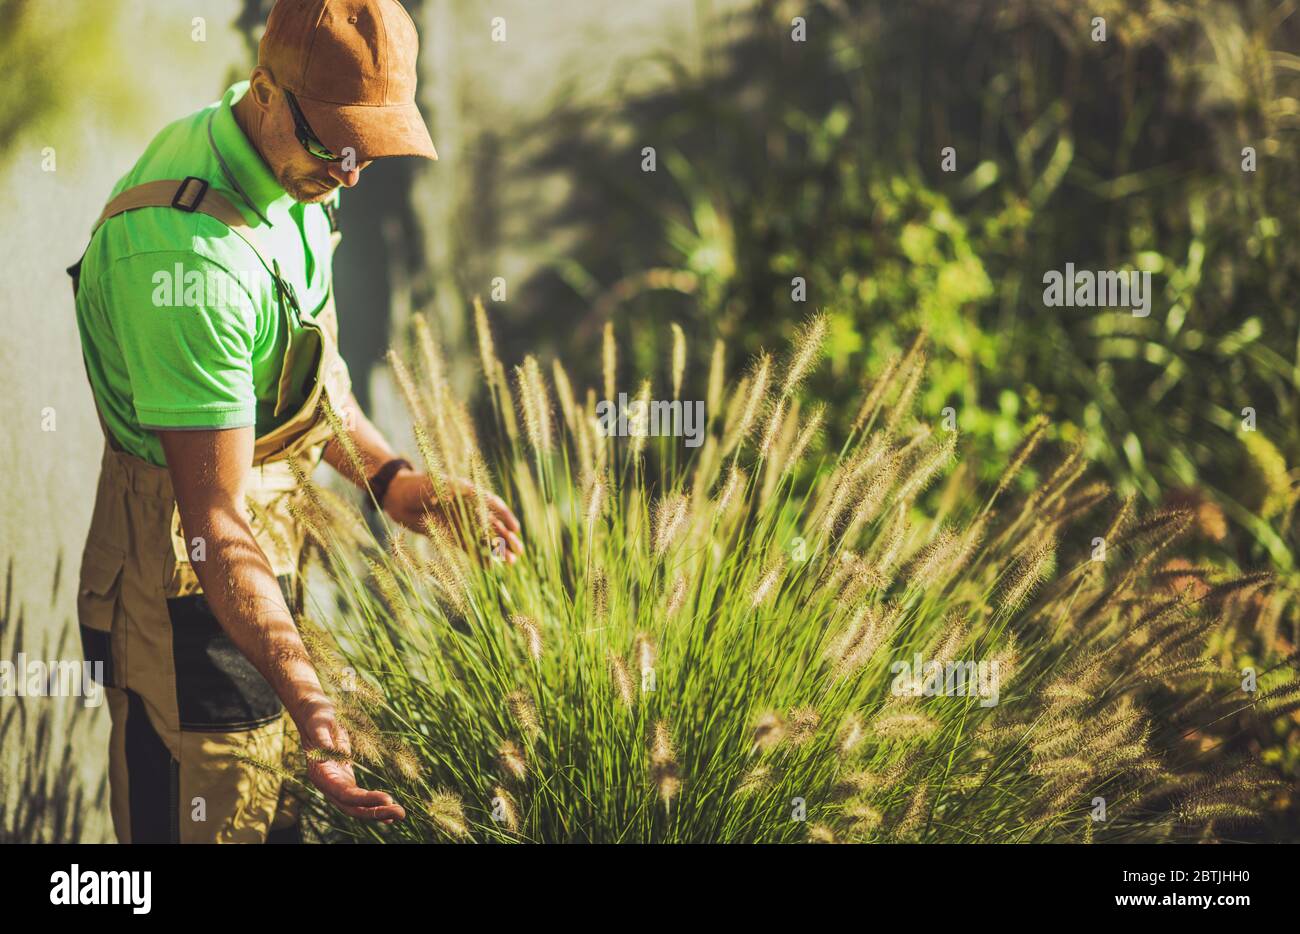 Caucasian Gardener in His 30s Taking Care of Decorative Garden Grasses. Residential Backyard Garden Maintenance. Landscaping Theme. Stock Photo